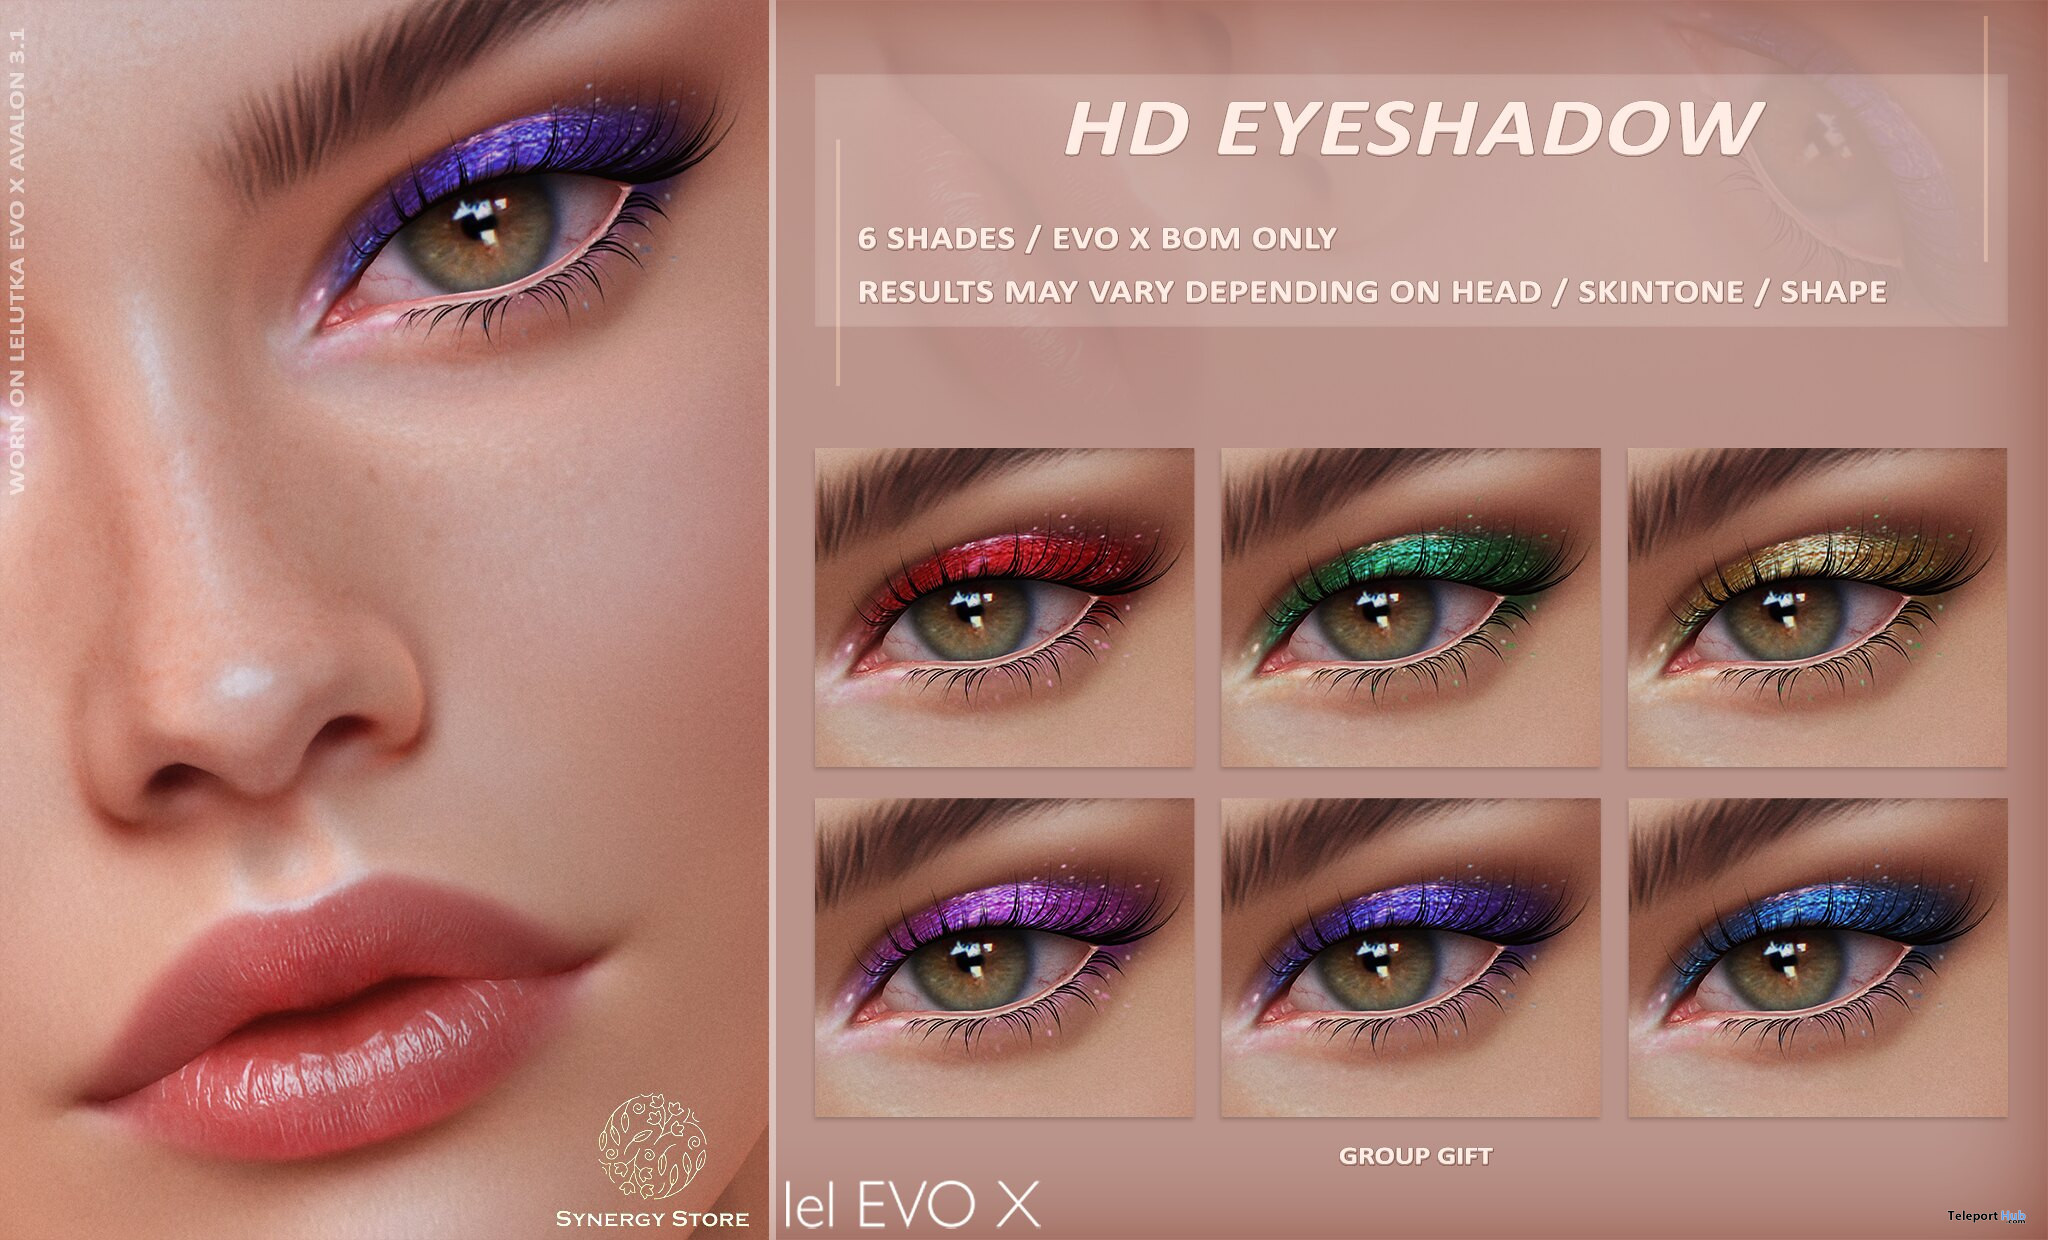 Festive HD Eyeshadows December 2022 Group Gift by Synergy Store - Teleport Hub - teleporthub.com